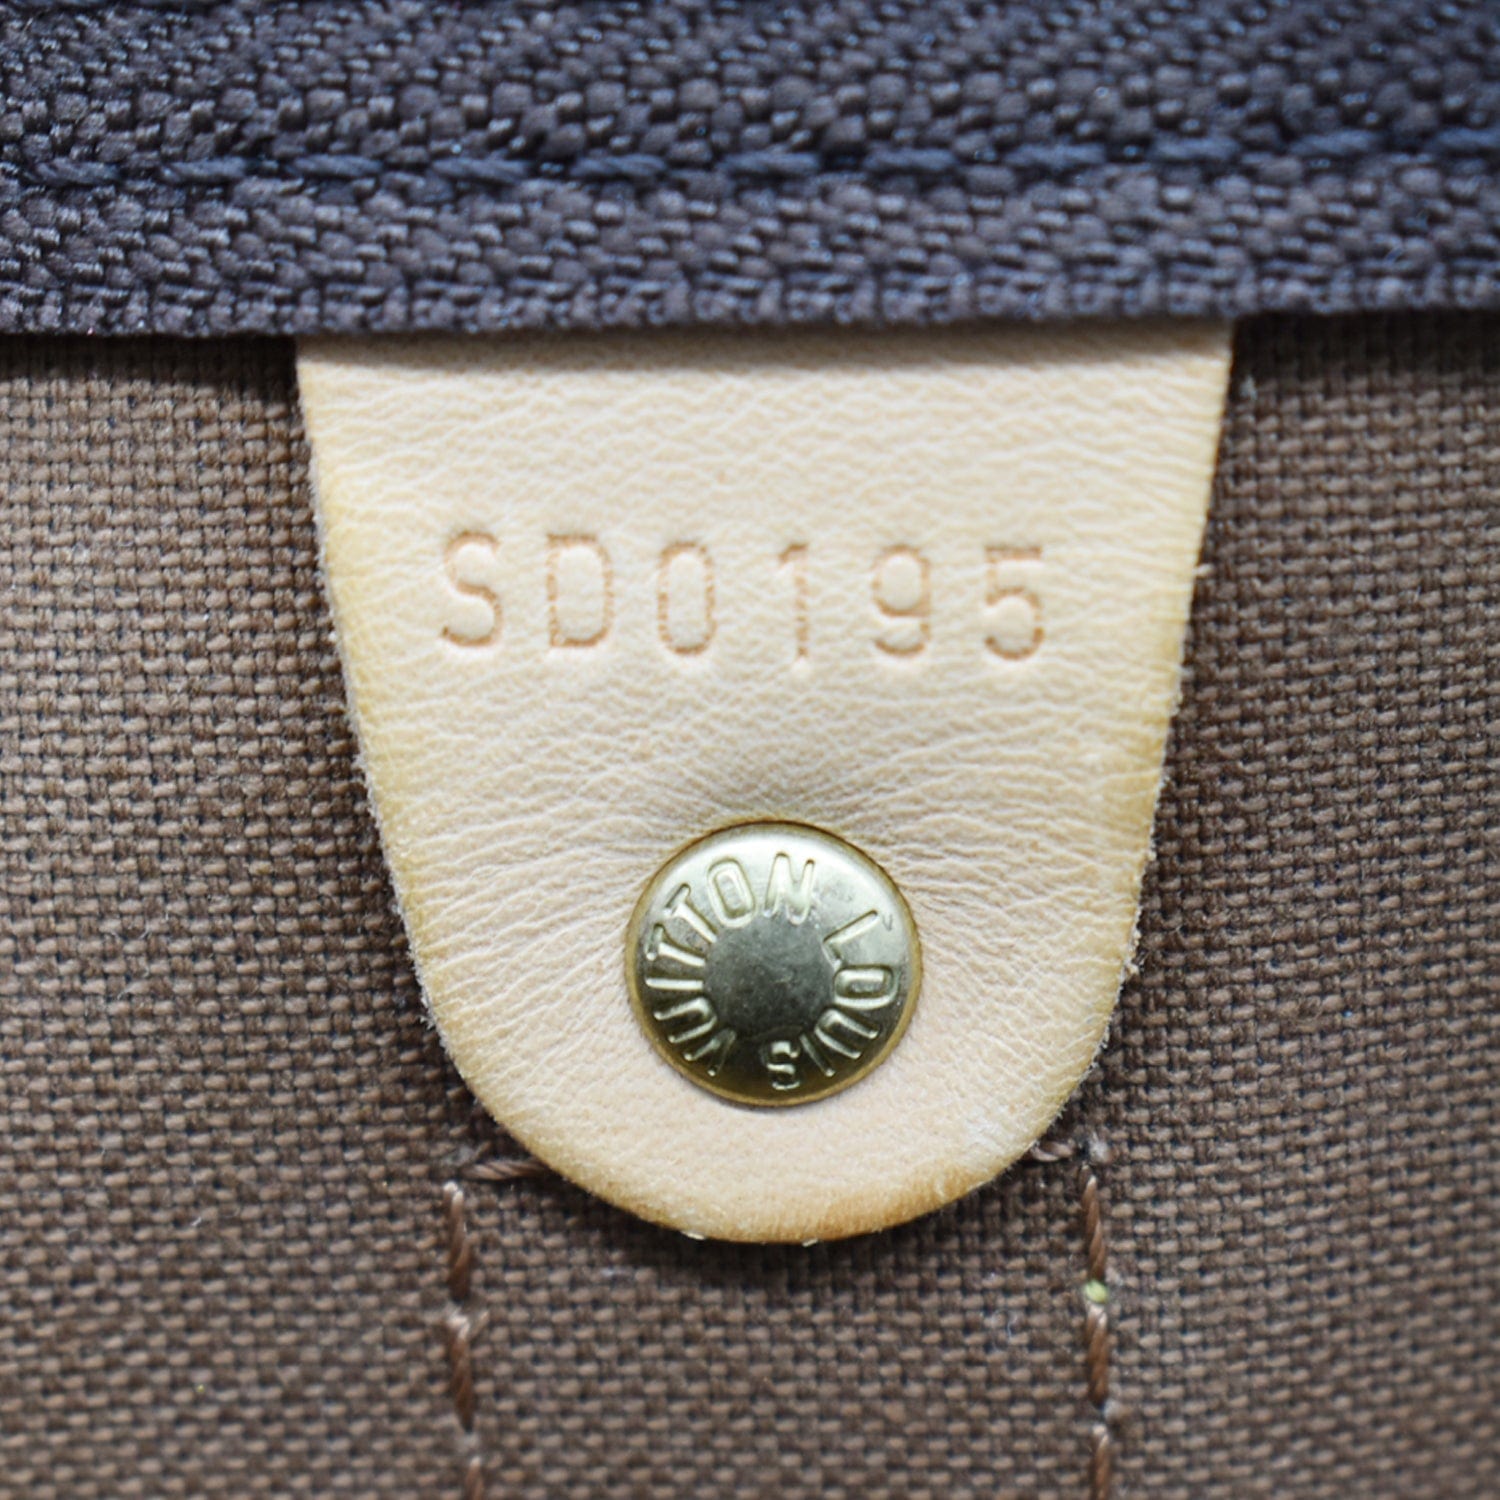 Louis Vuitton Keepall Travel bag 361212